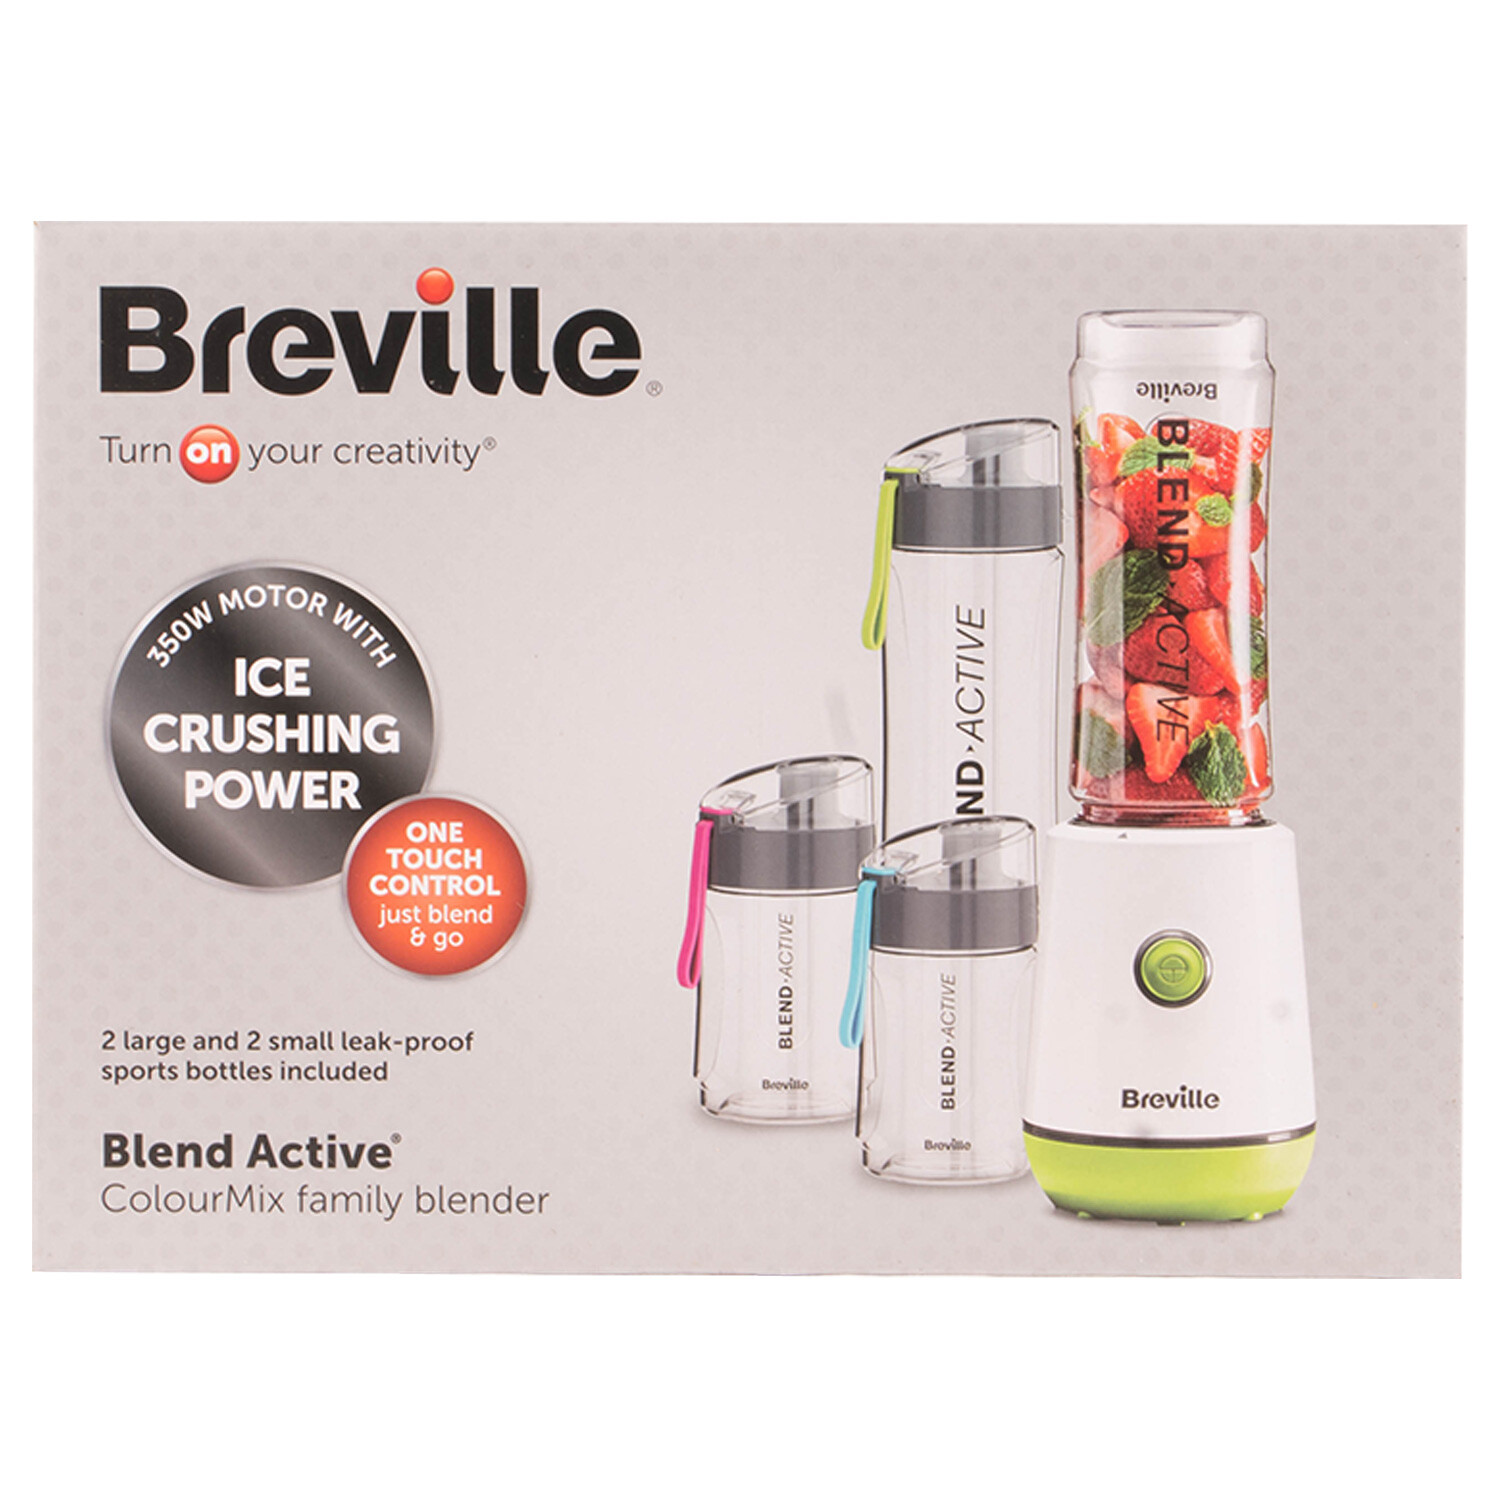 Breville Green Blend Active Colourmix Family Blender 350W Image 1